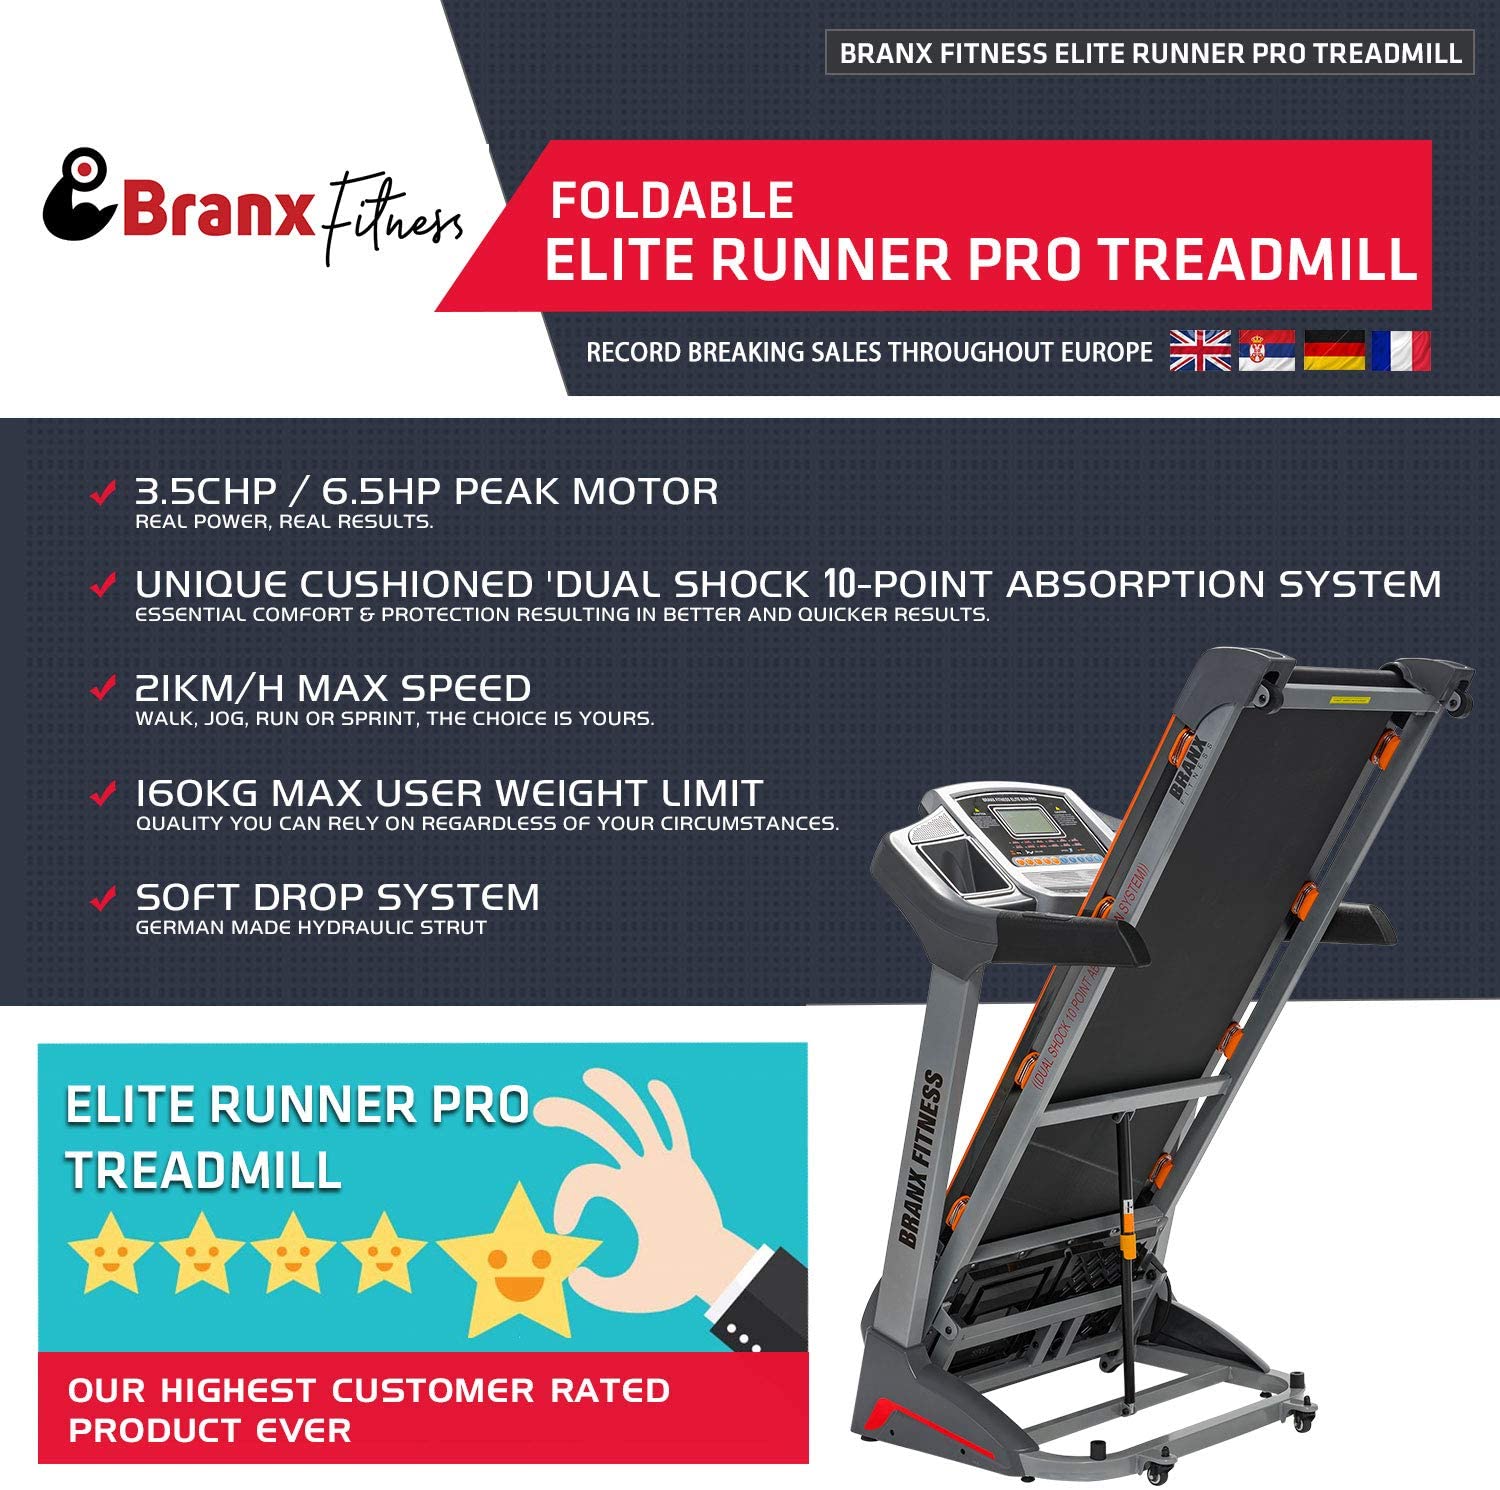 Branx fitness elite runner pro treadmill info